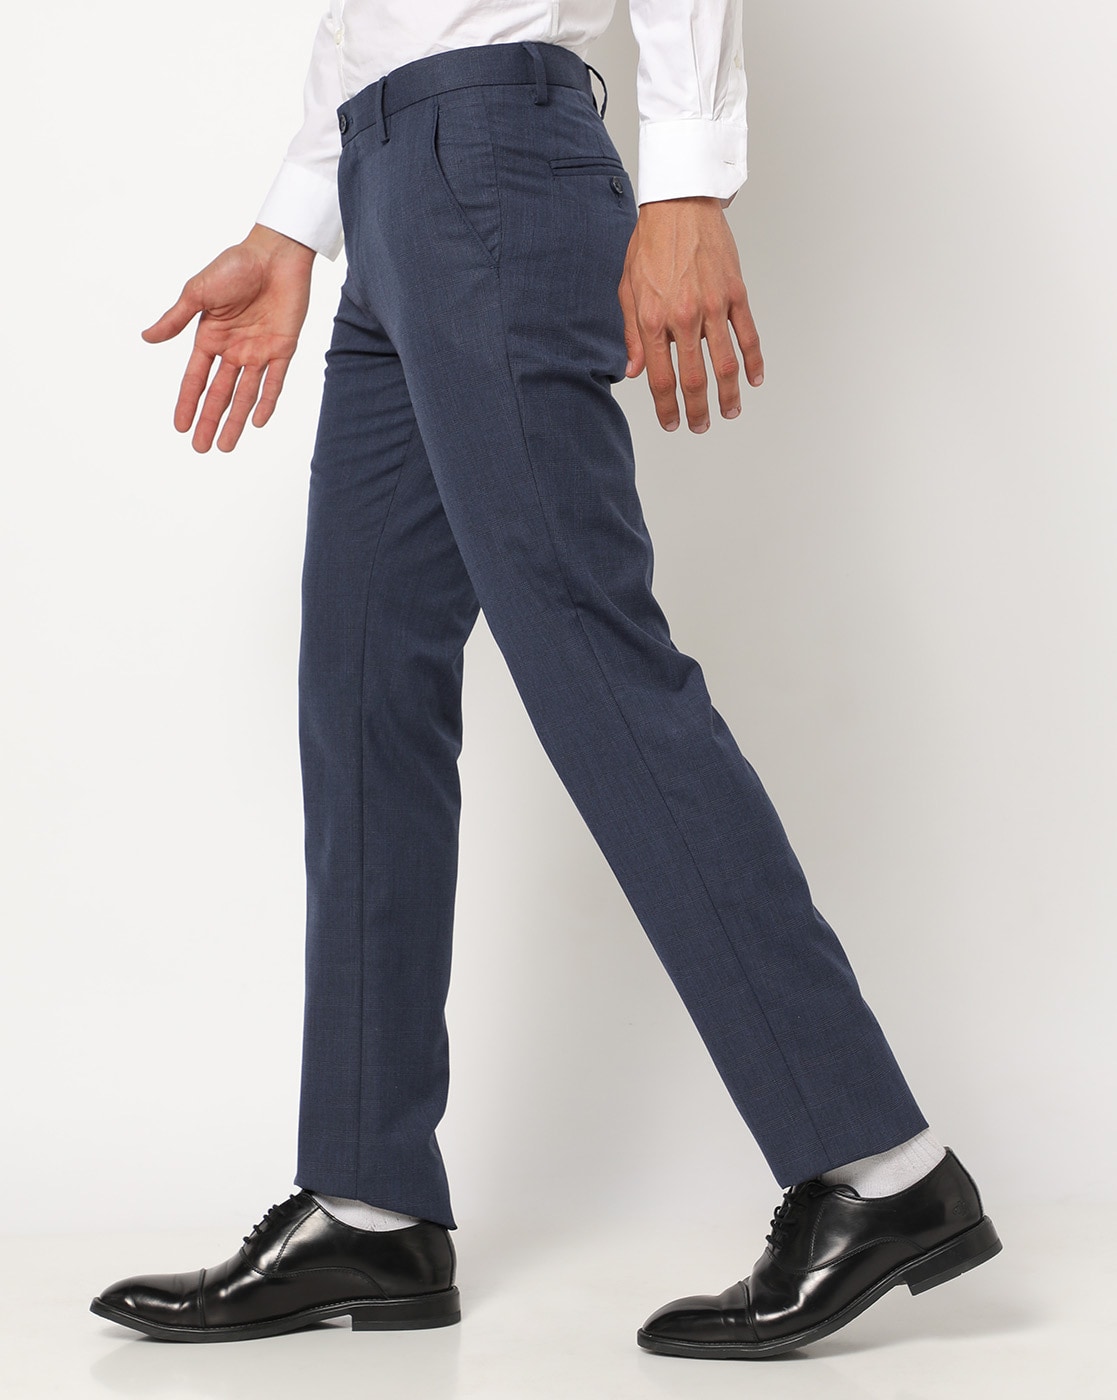 Men's Skinny Fit Suits & Separates | Nordstrom